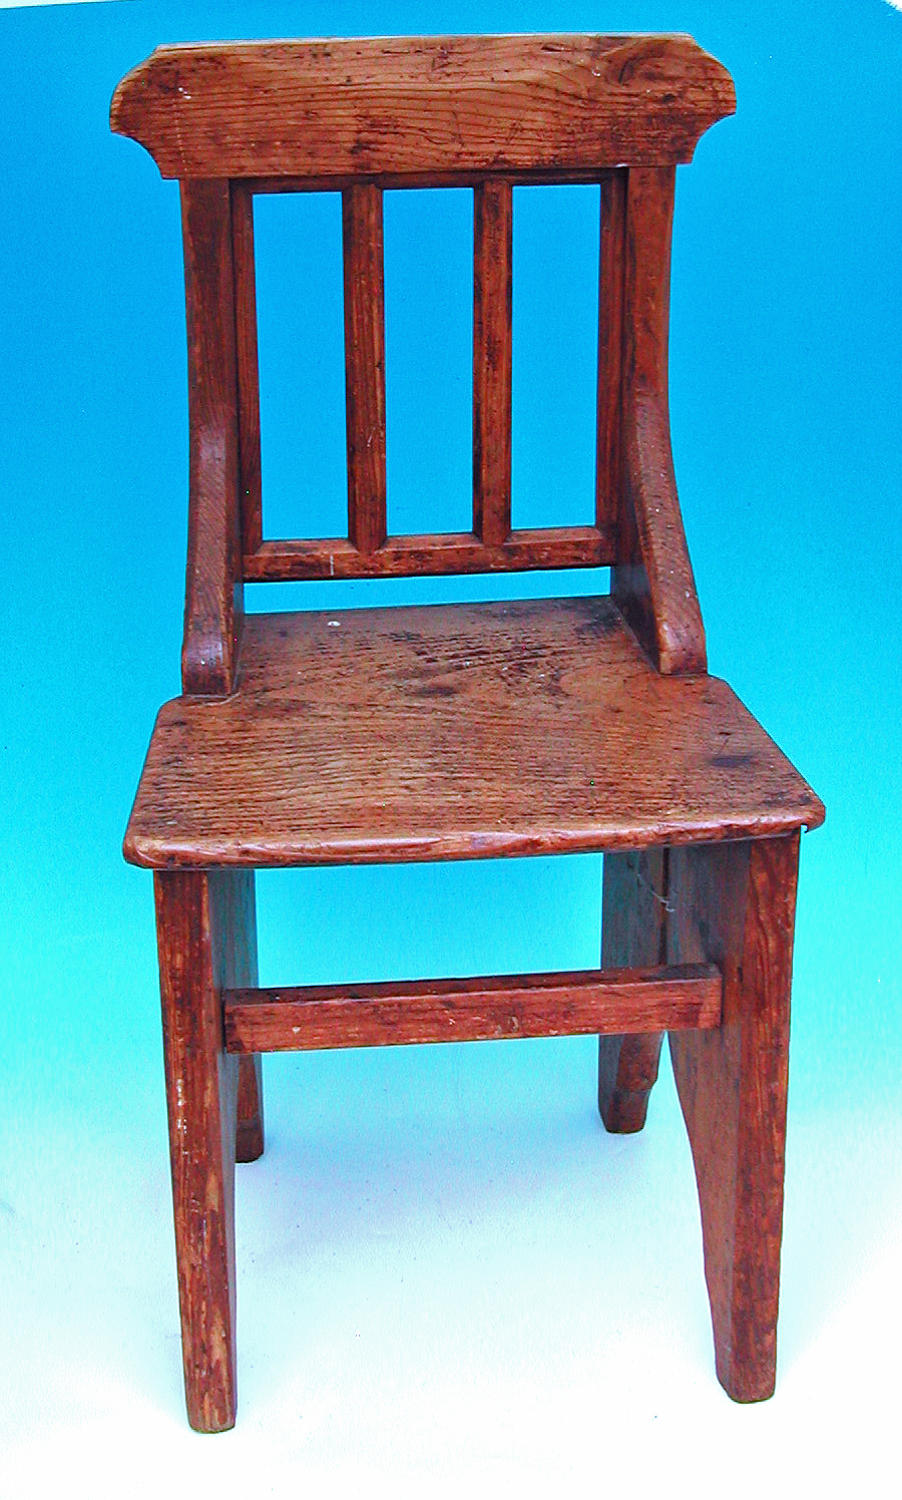 Late 18thc Antique Pine Welsh Childs Chapel Chair. Welsh C1780 - C1800